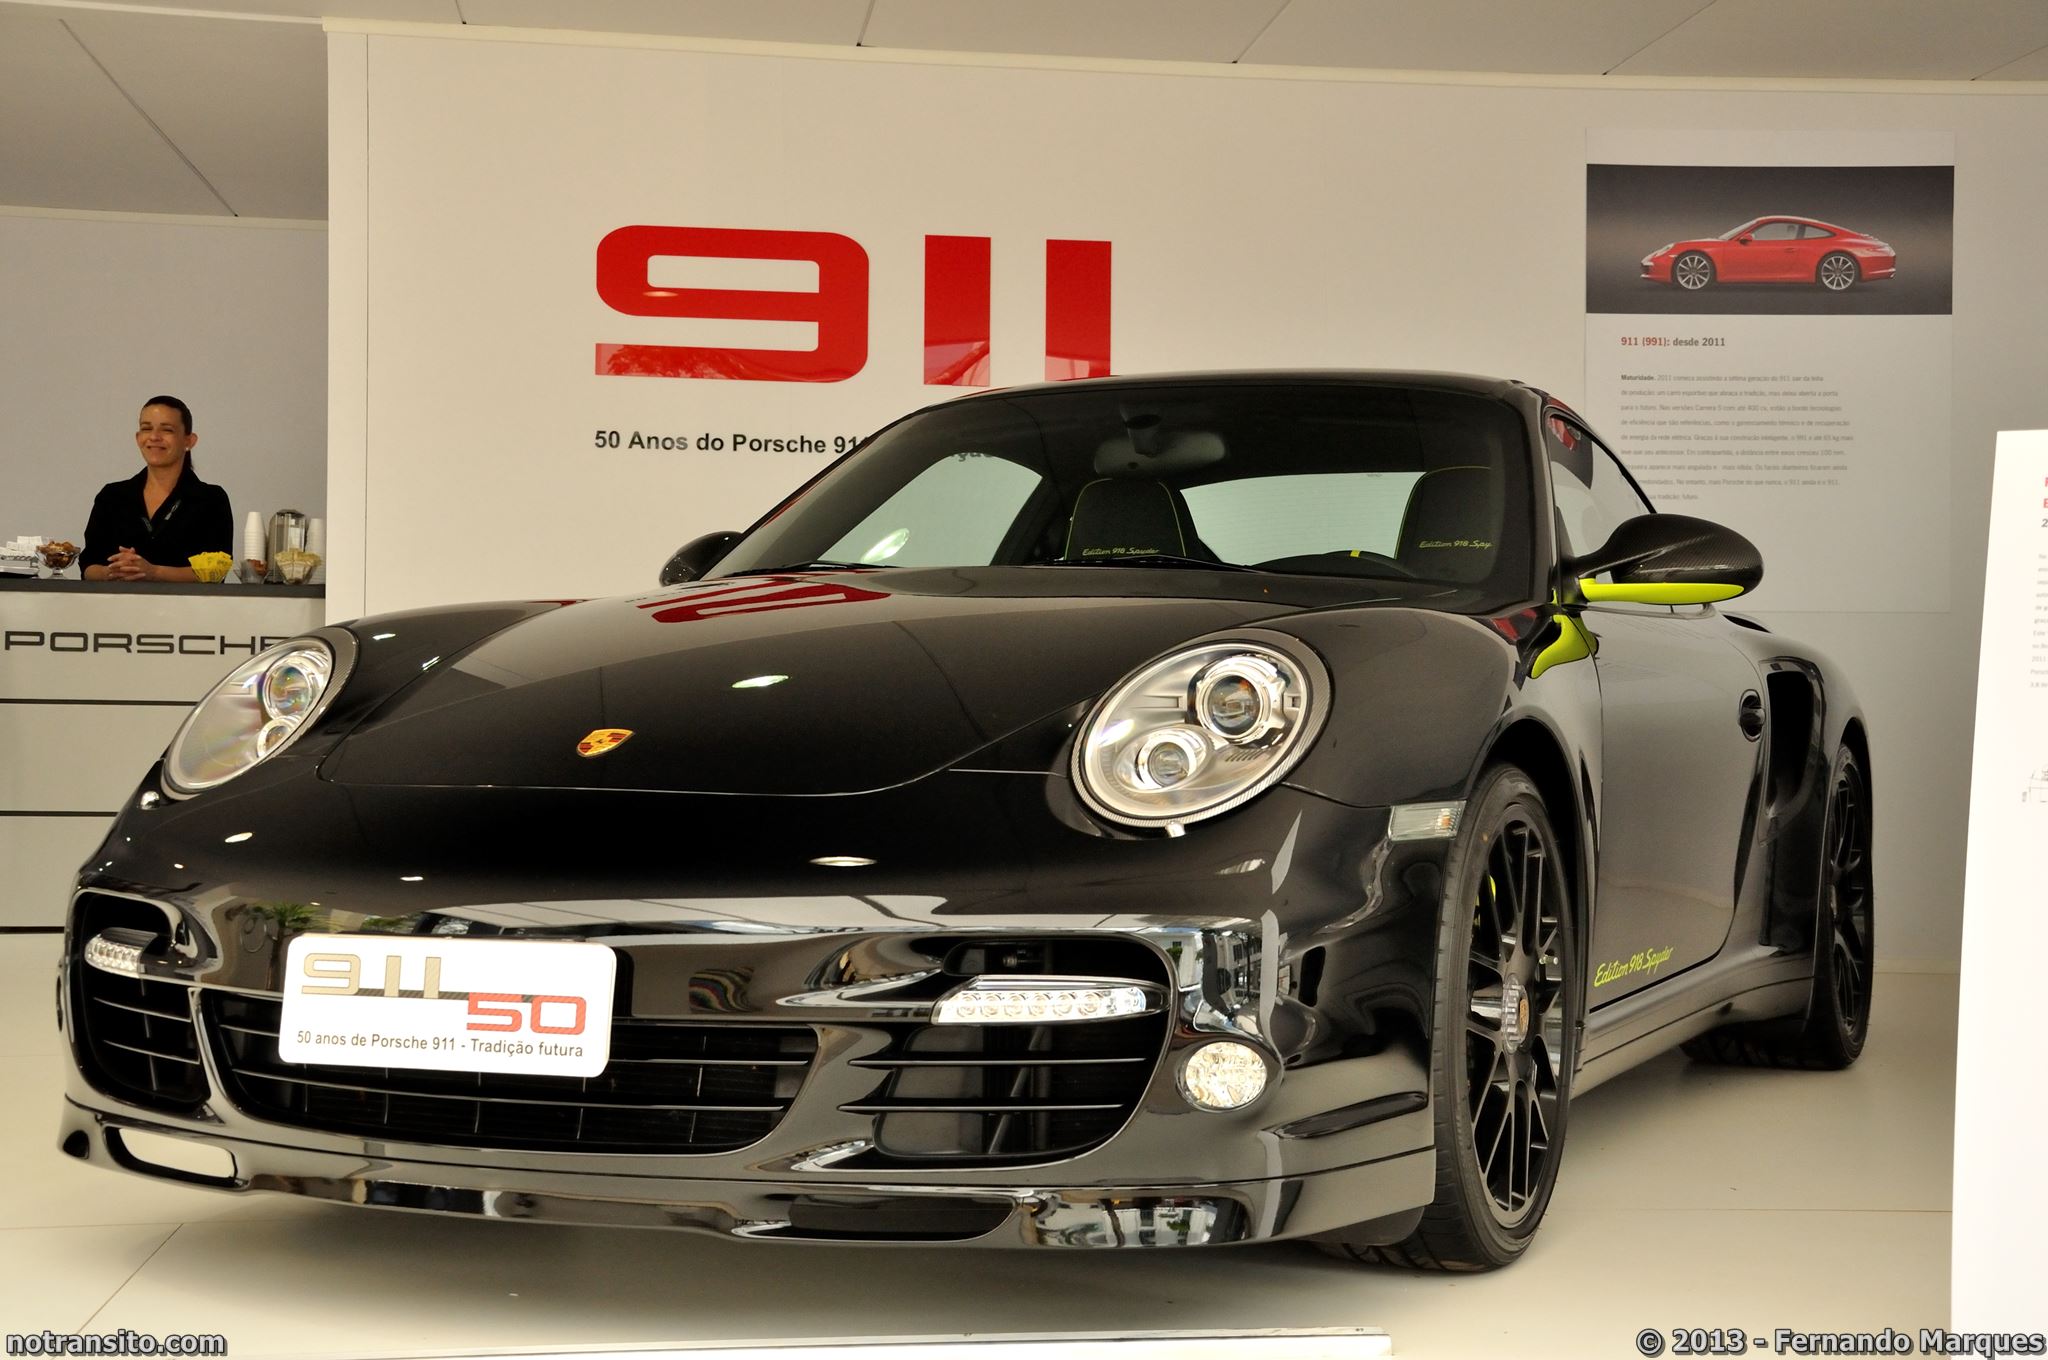 Porsche 911 Turbo S Edition 918 Spyder Type 997, Auto Premium Show 2013